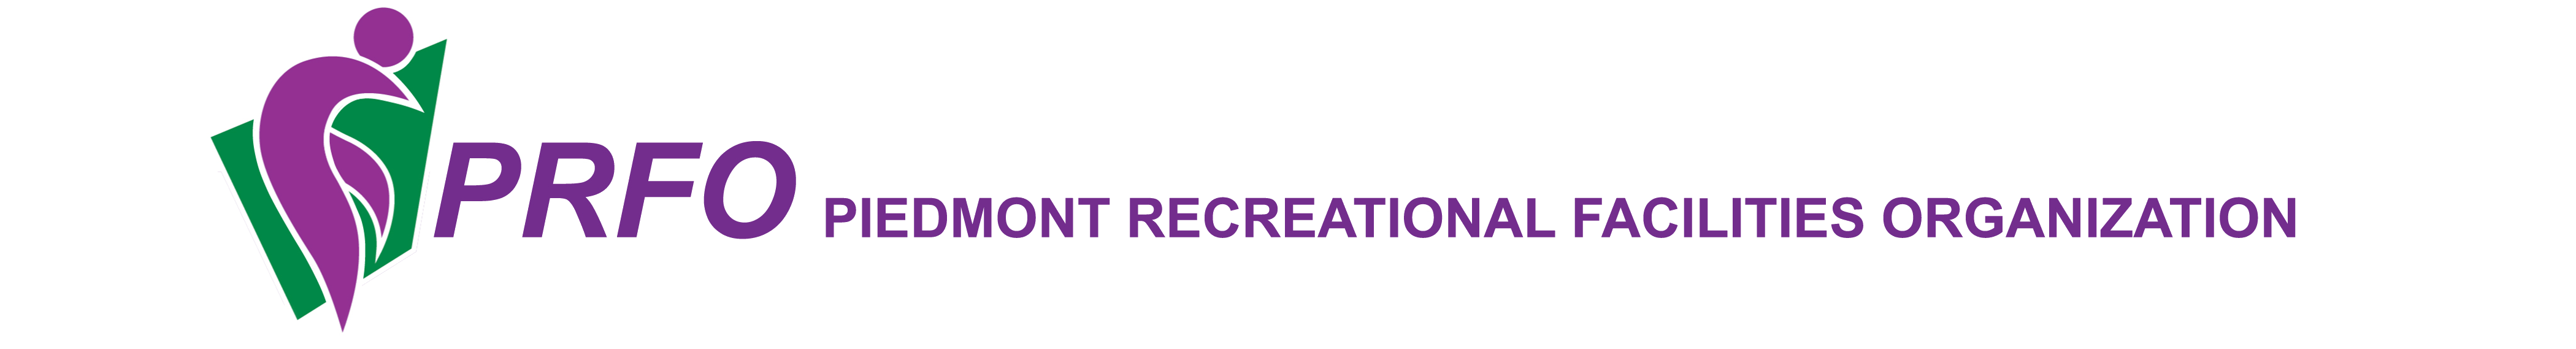 PRFO – Piedmont Recreational Facilities Organization Logo